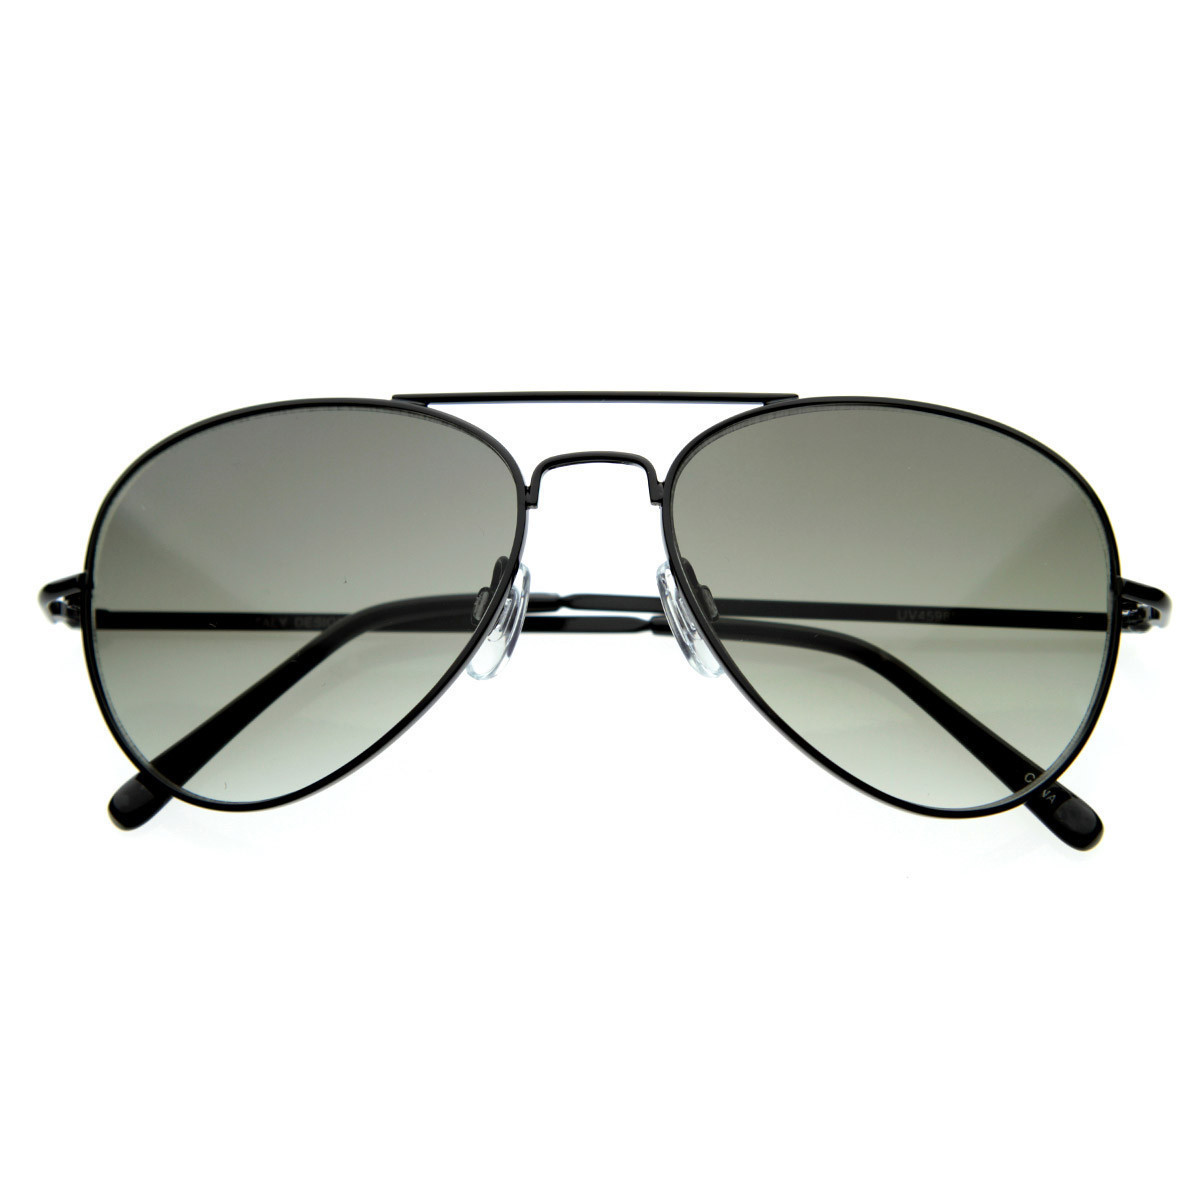 Small Classic Aviator Sunglasses 50mm Aviators - 1372 - Silver